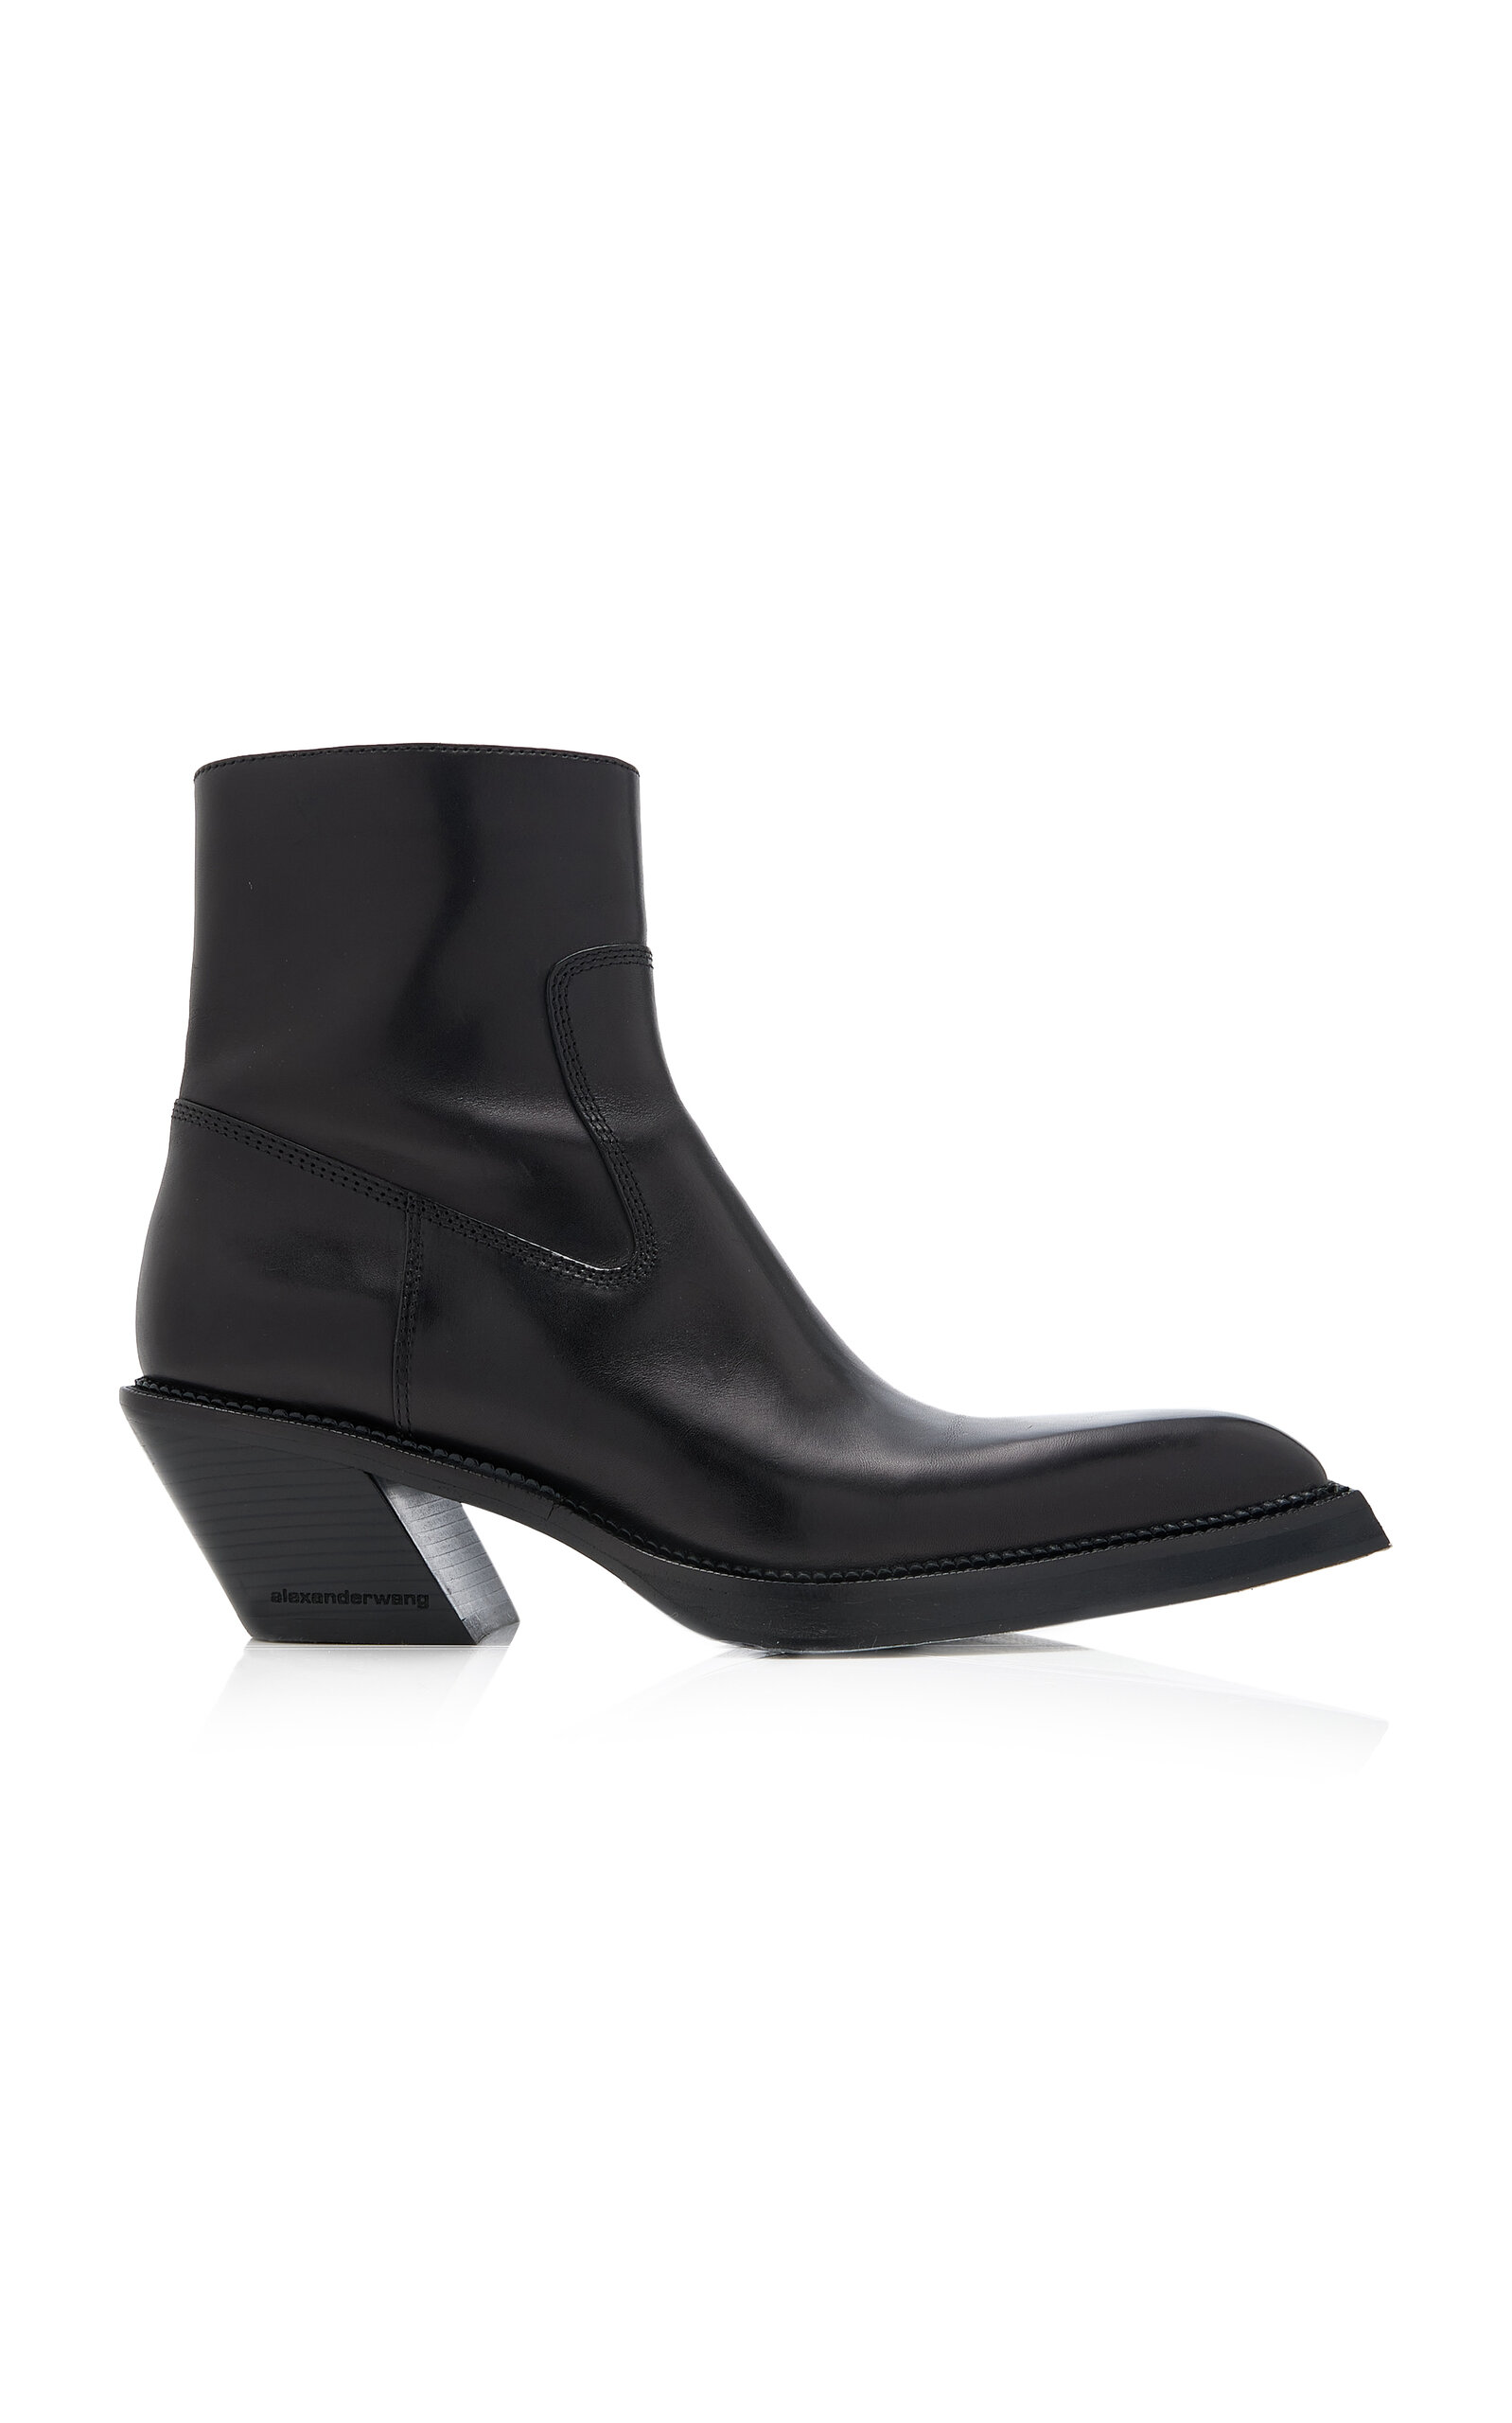 Alexander Wang - Women's Donovan Leather Ankle Boots - Black - IT 39 - Moda Operandi